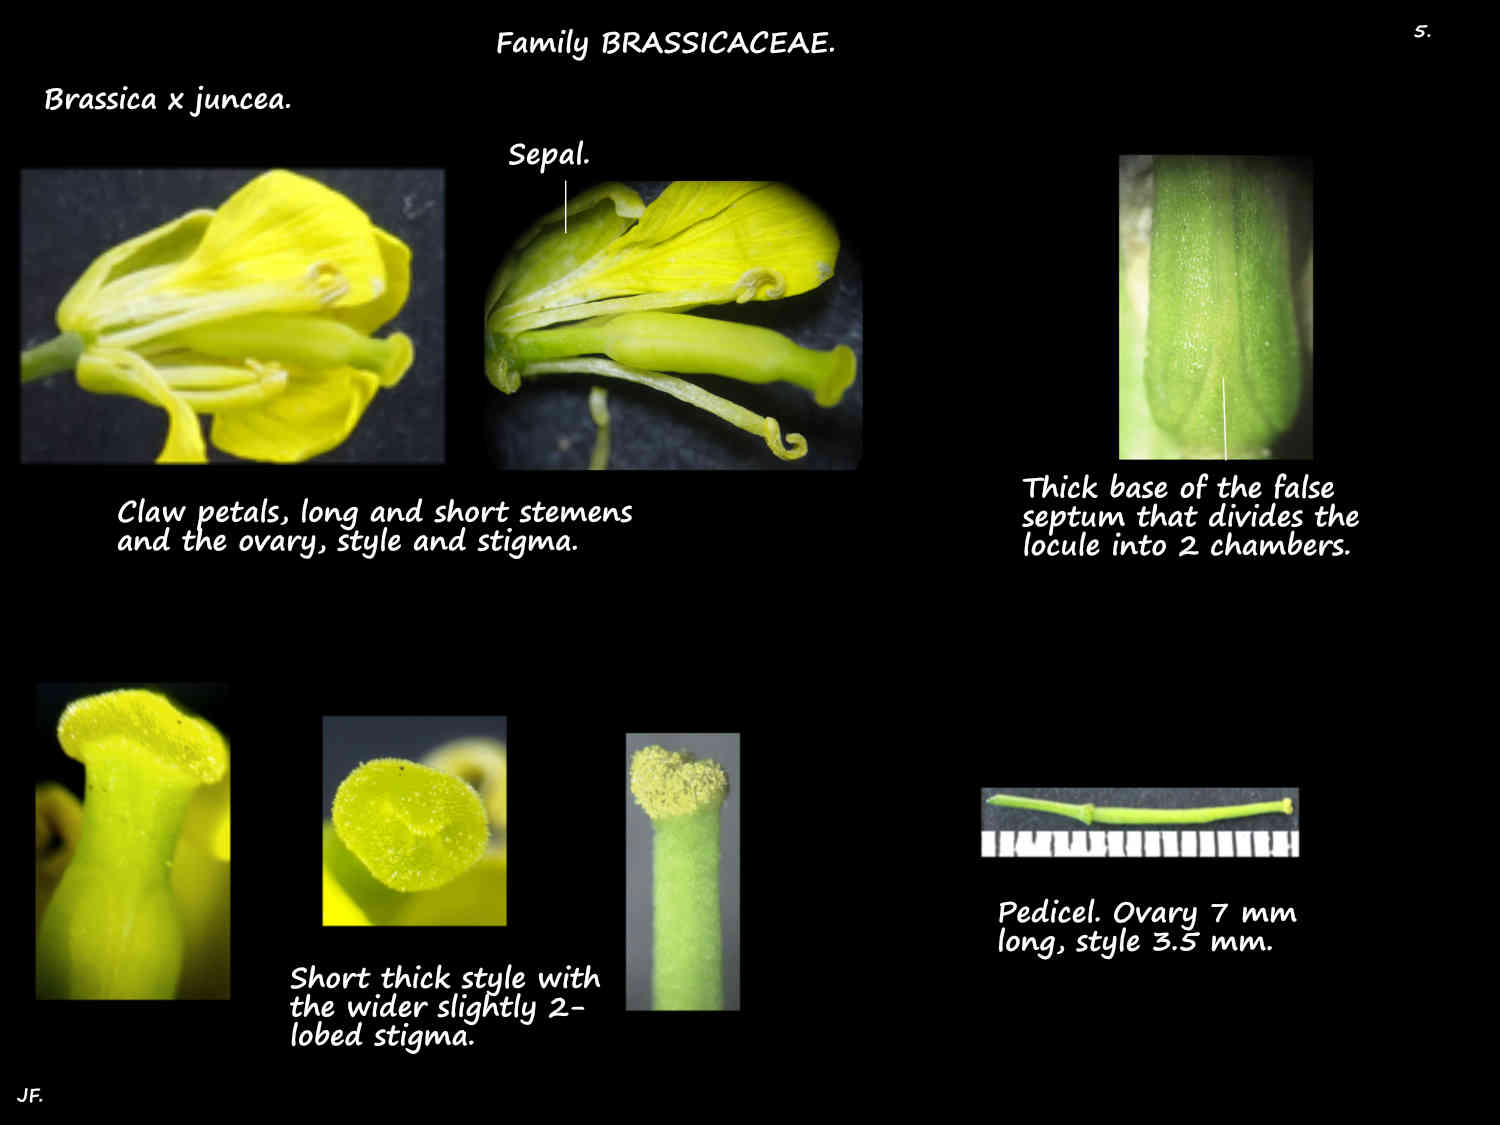 5 Brassica x juncea ovary, style & stigma